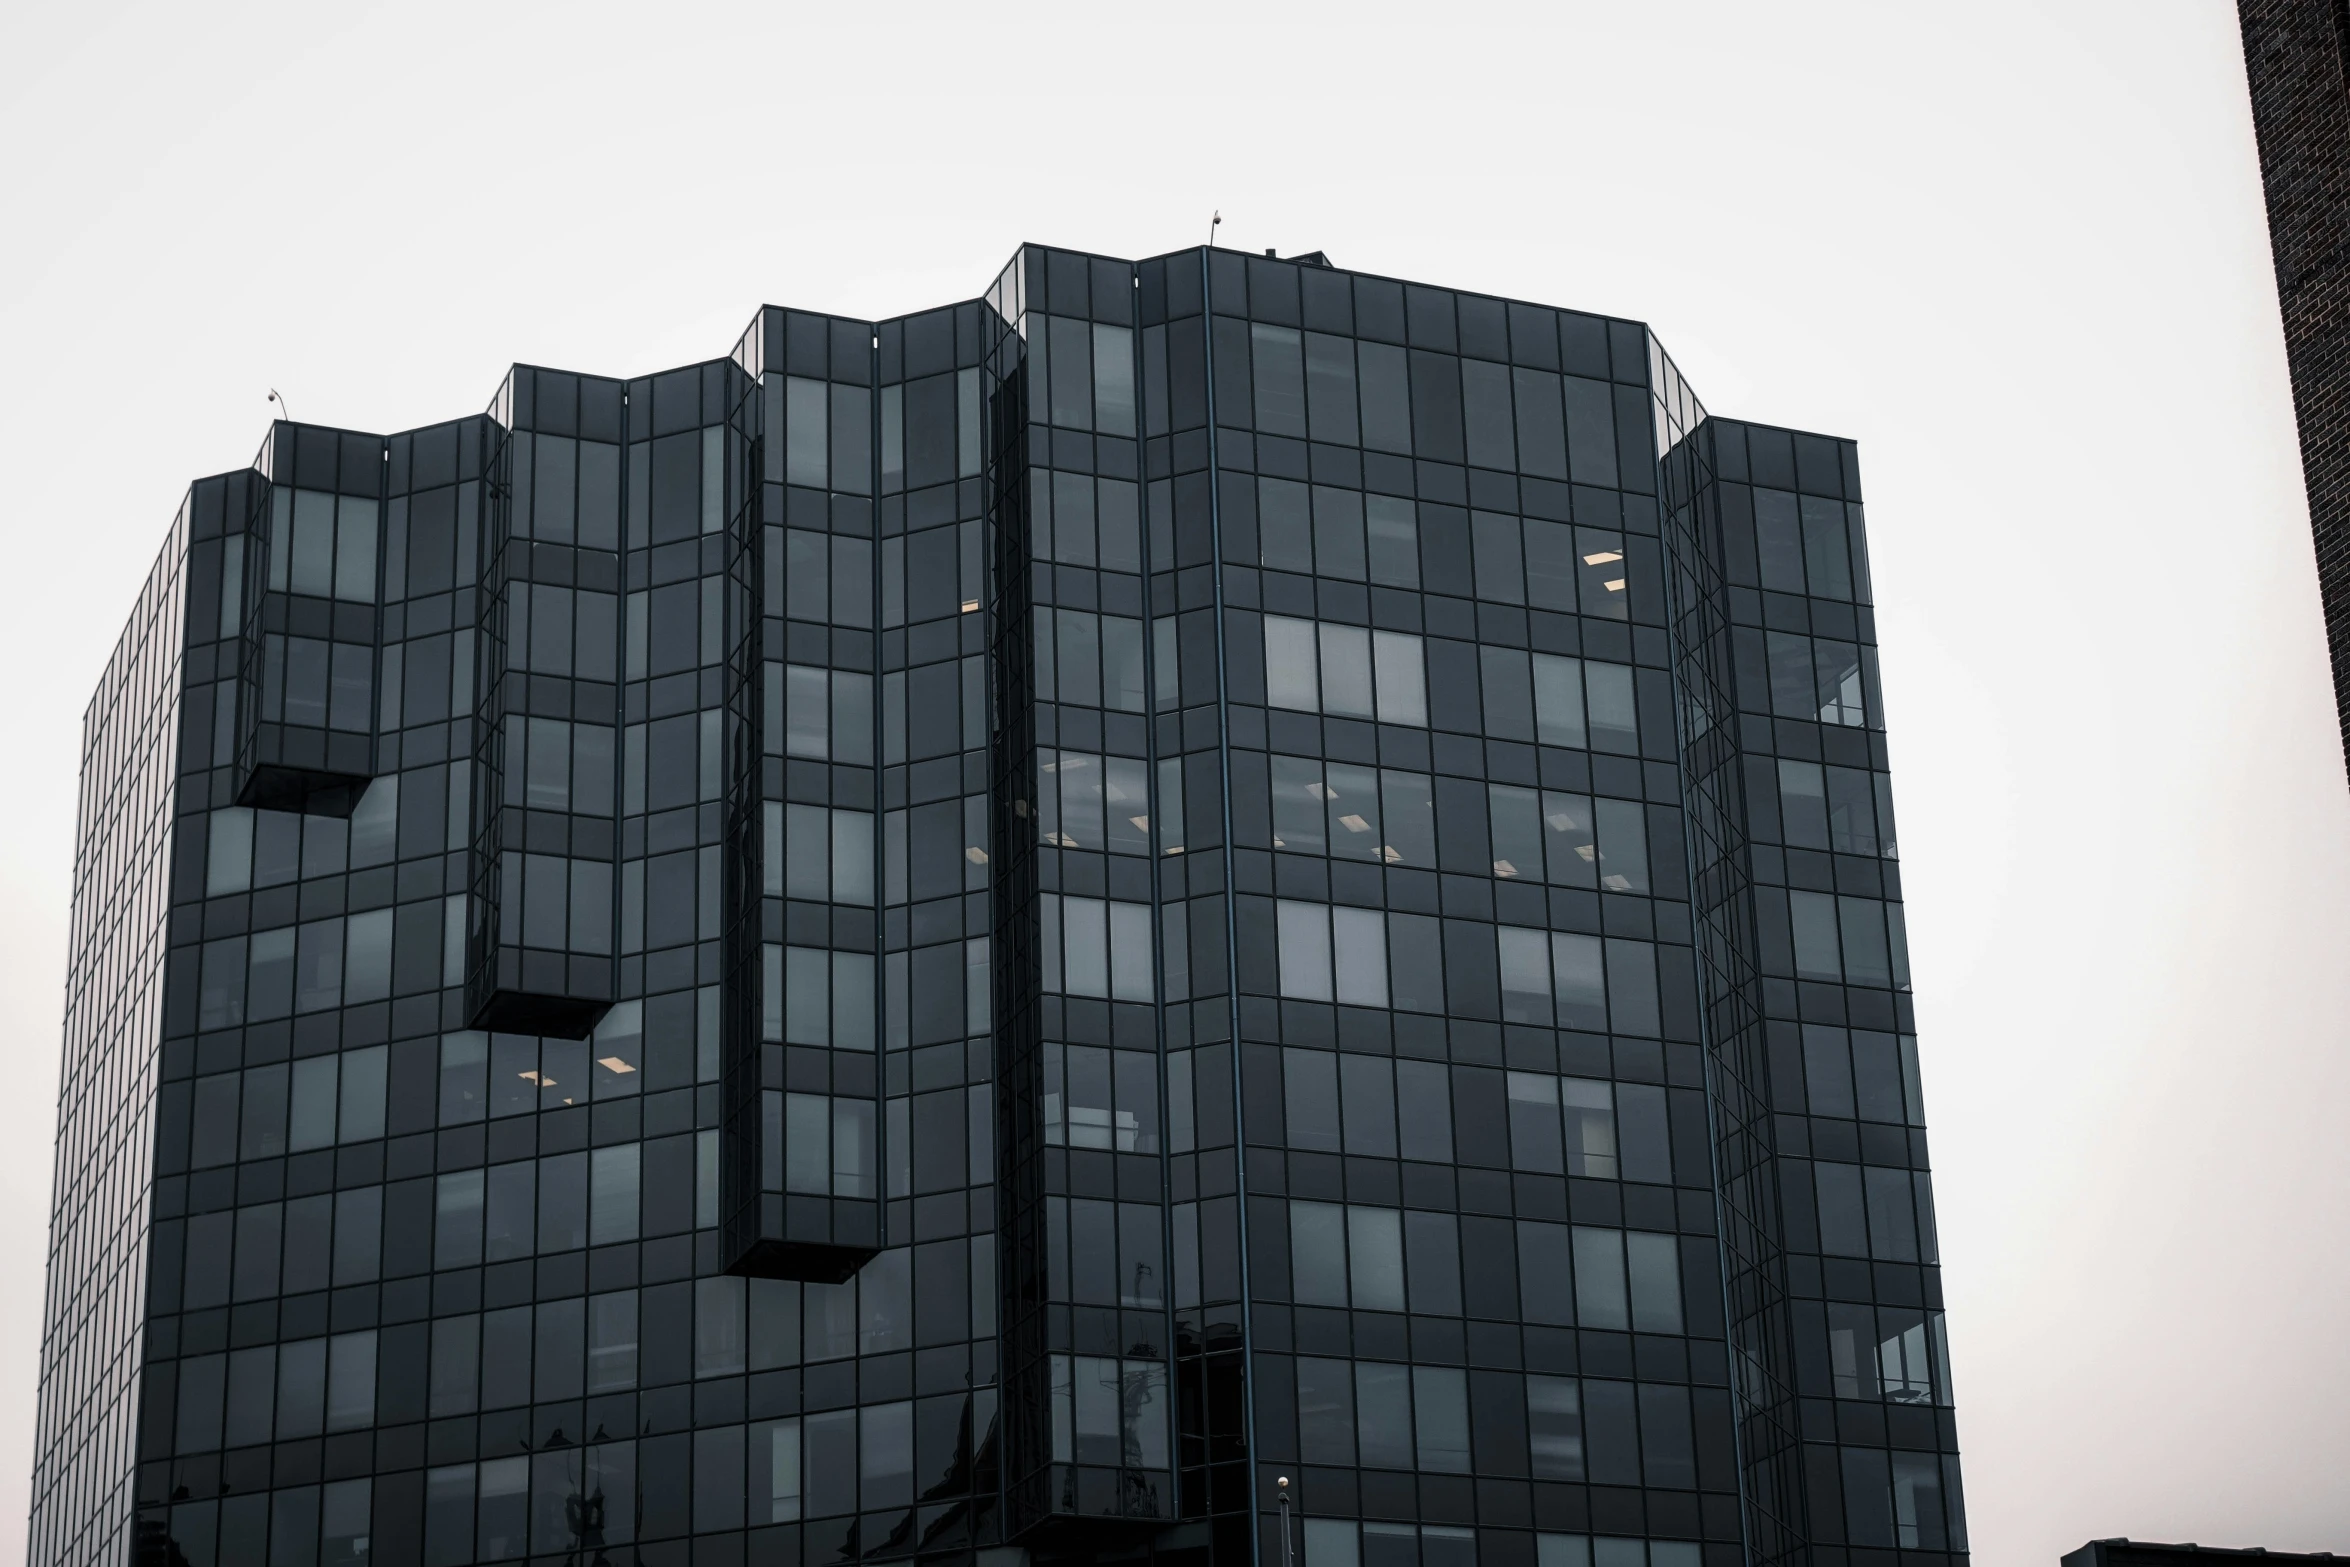 black windows on a high rise building at dusk